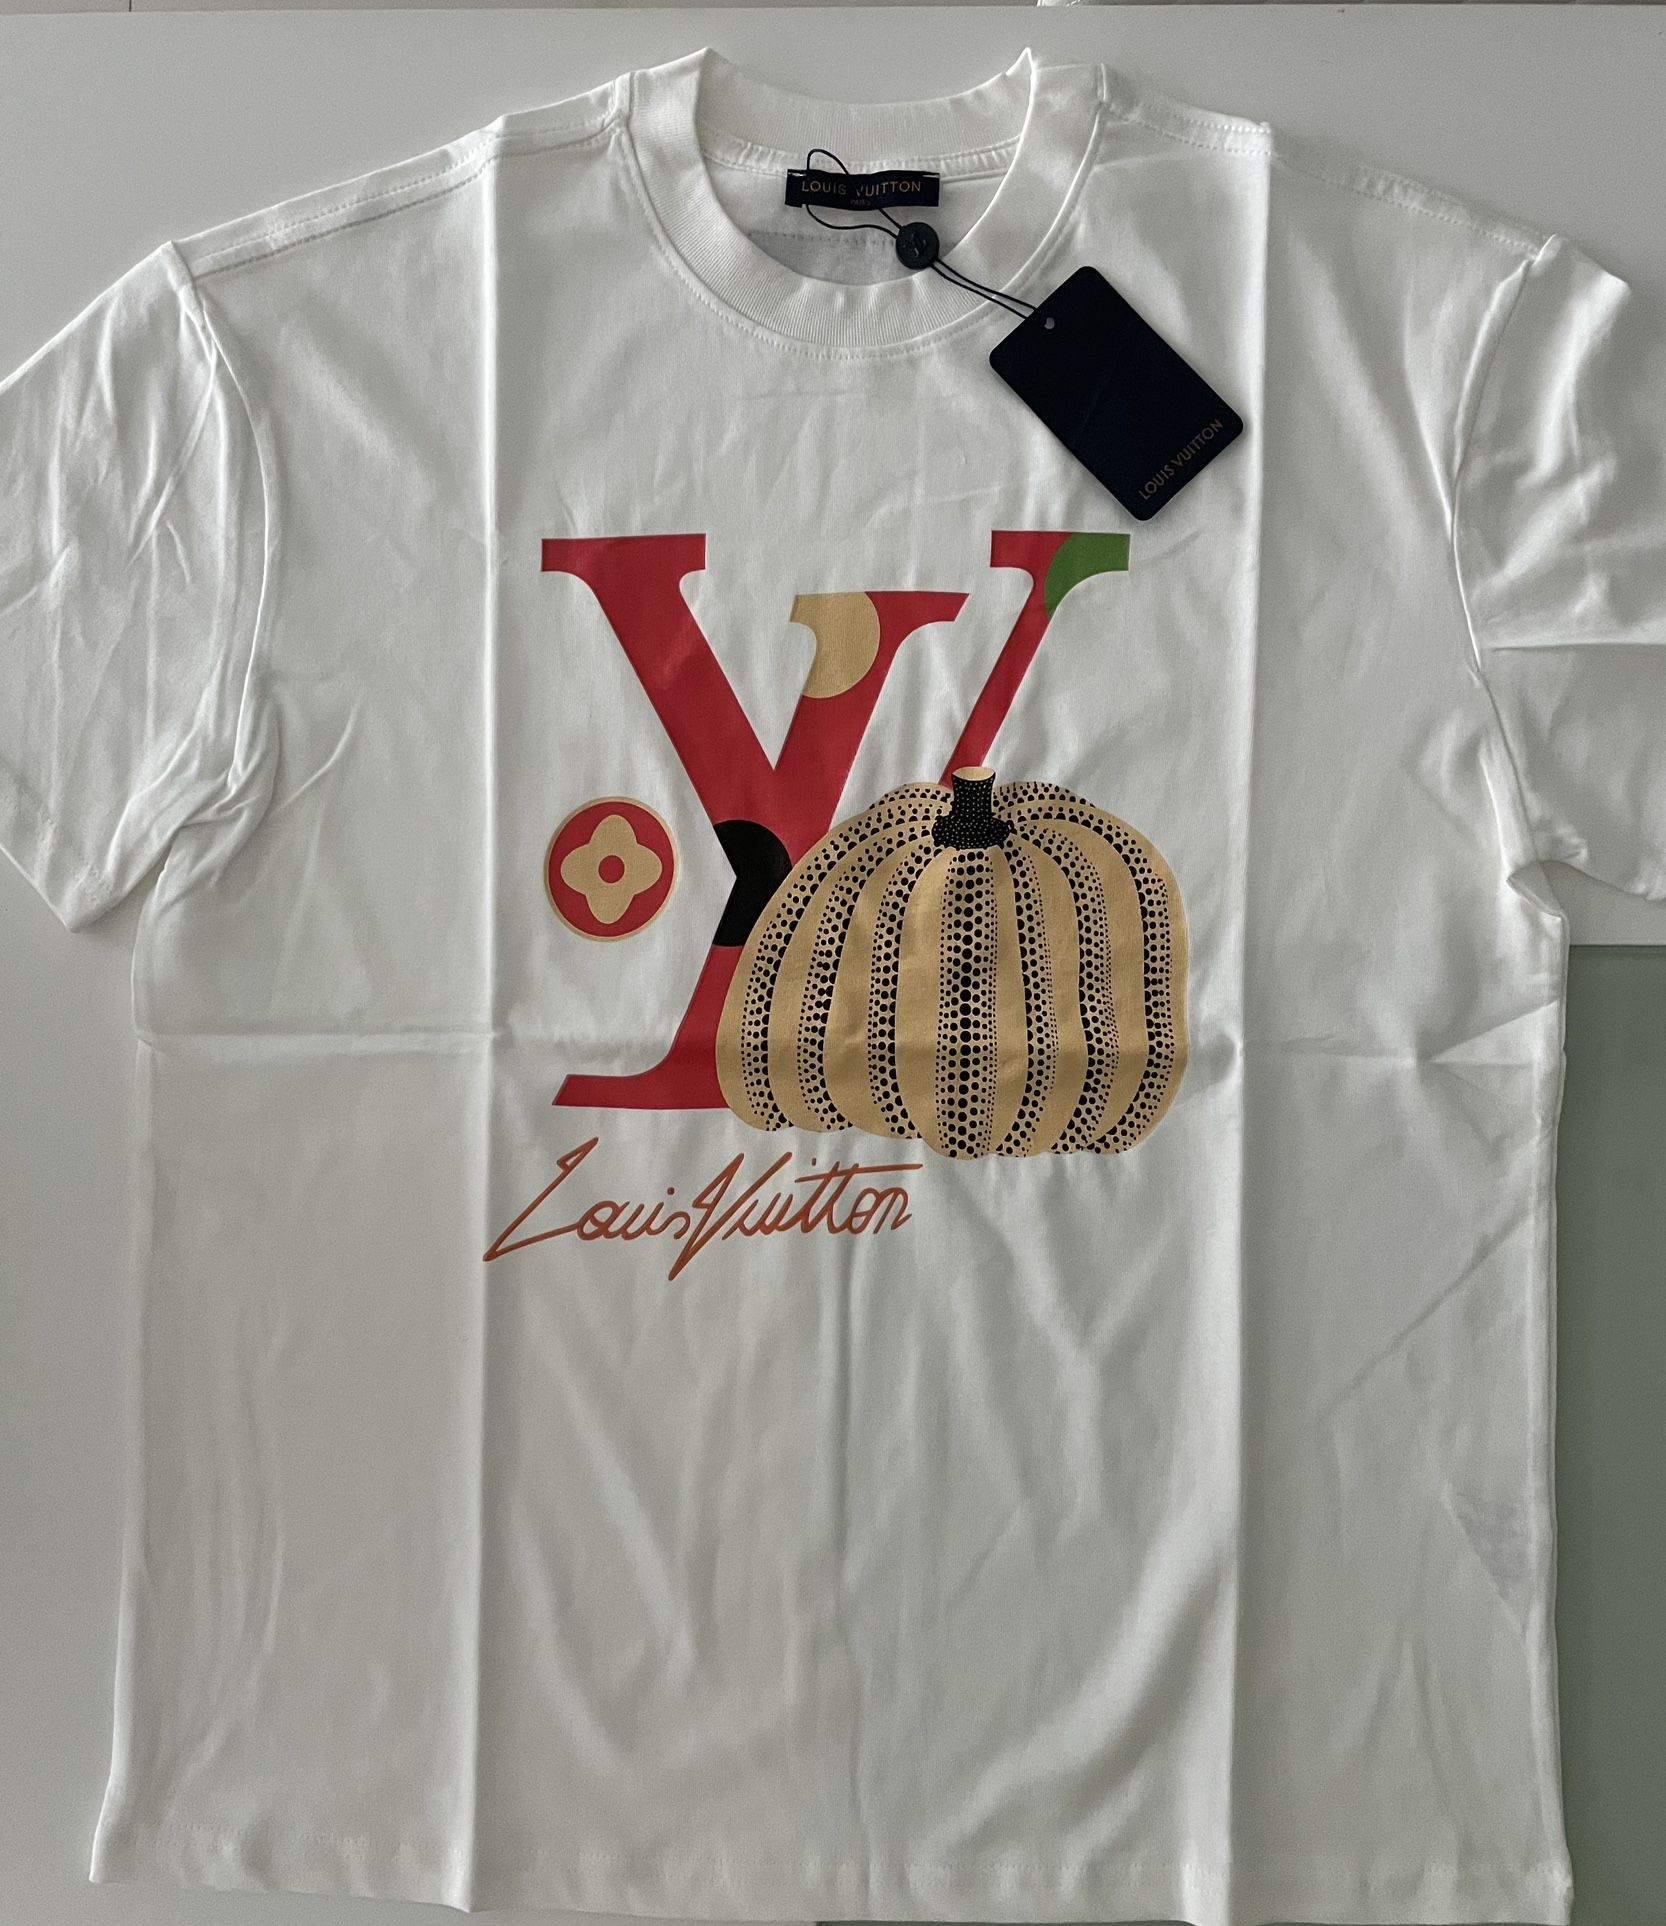 Louis Vuitton Shirt for Sale in Miami, FL - OfferUp